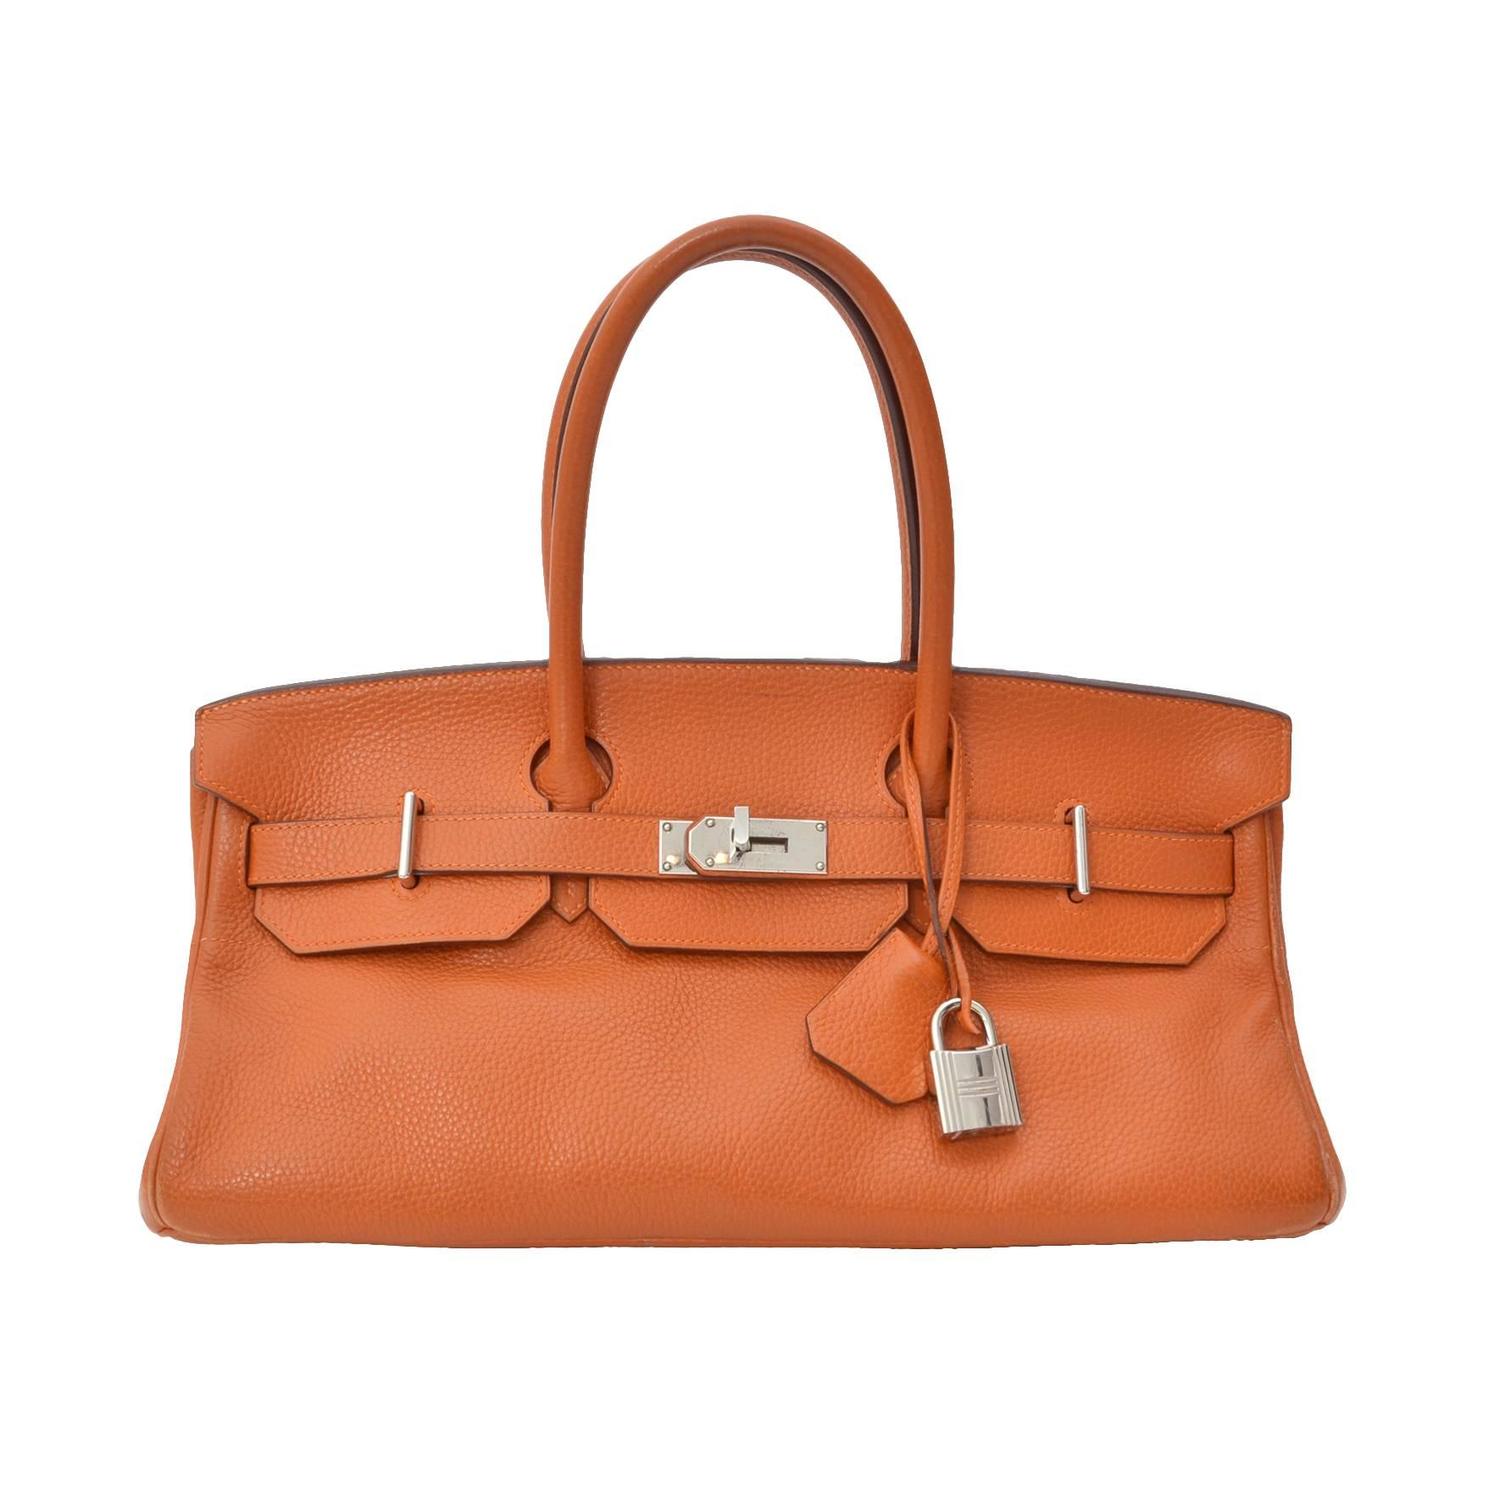 how much is a birkin bag - Herm��s Birkin Shoulder Bag PHW Pumpkin Orange For Sale at 1stdibs